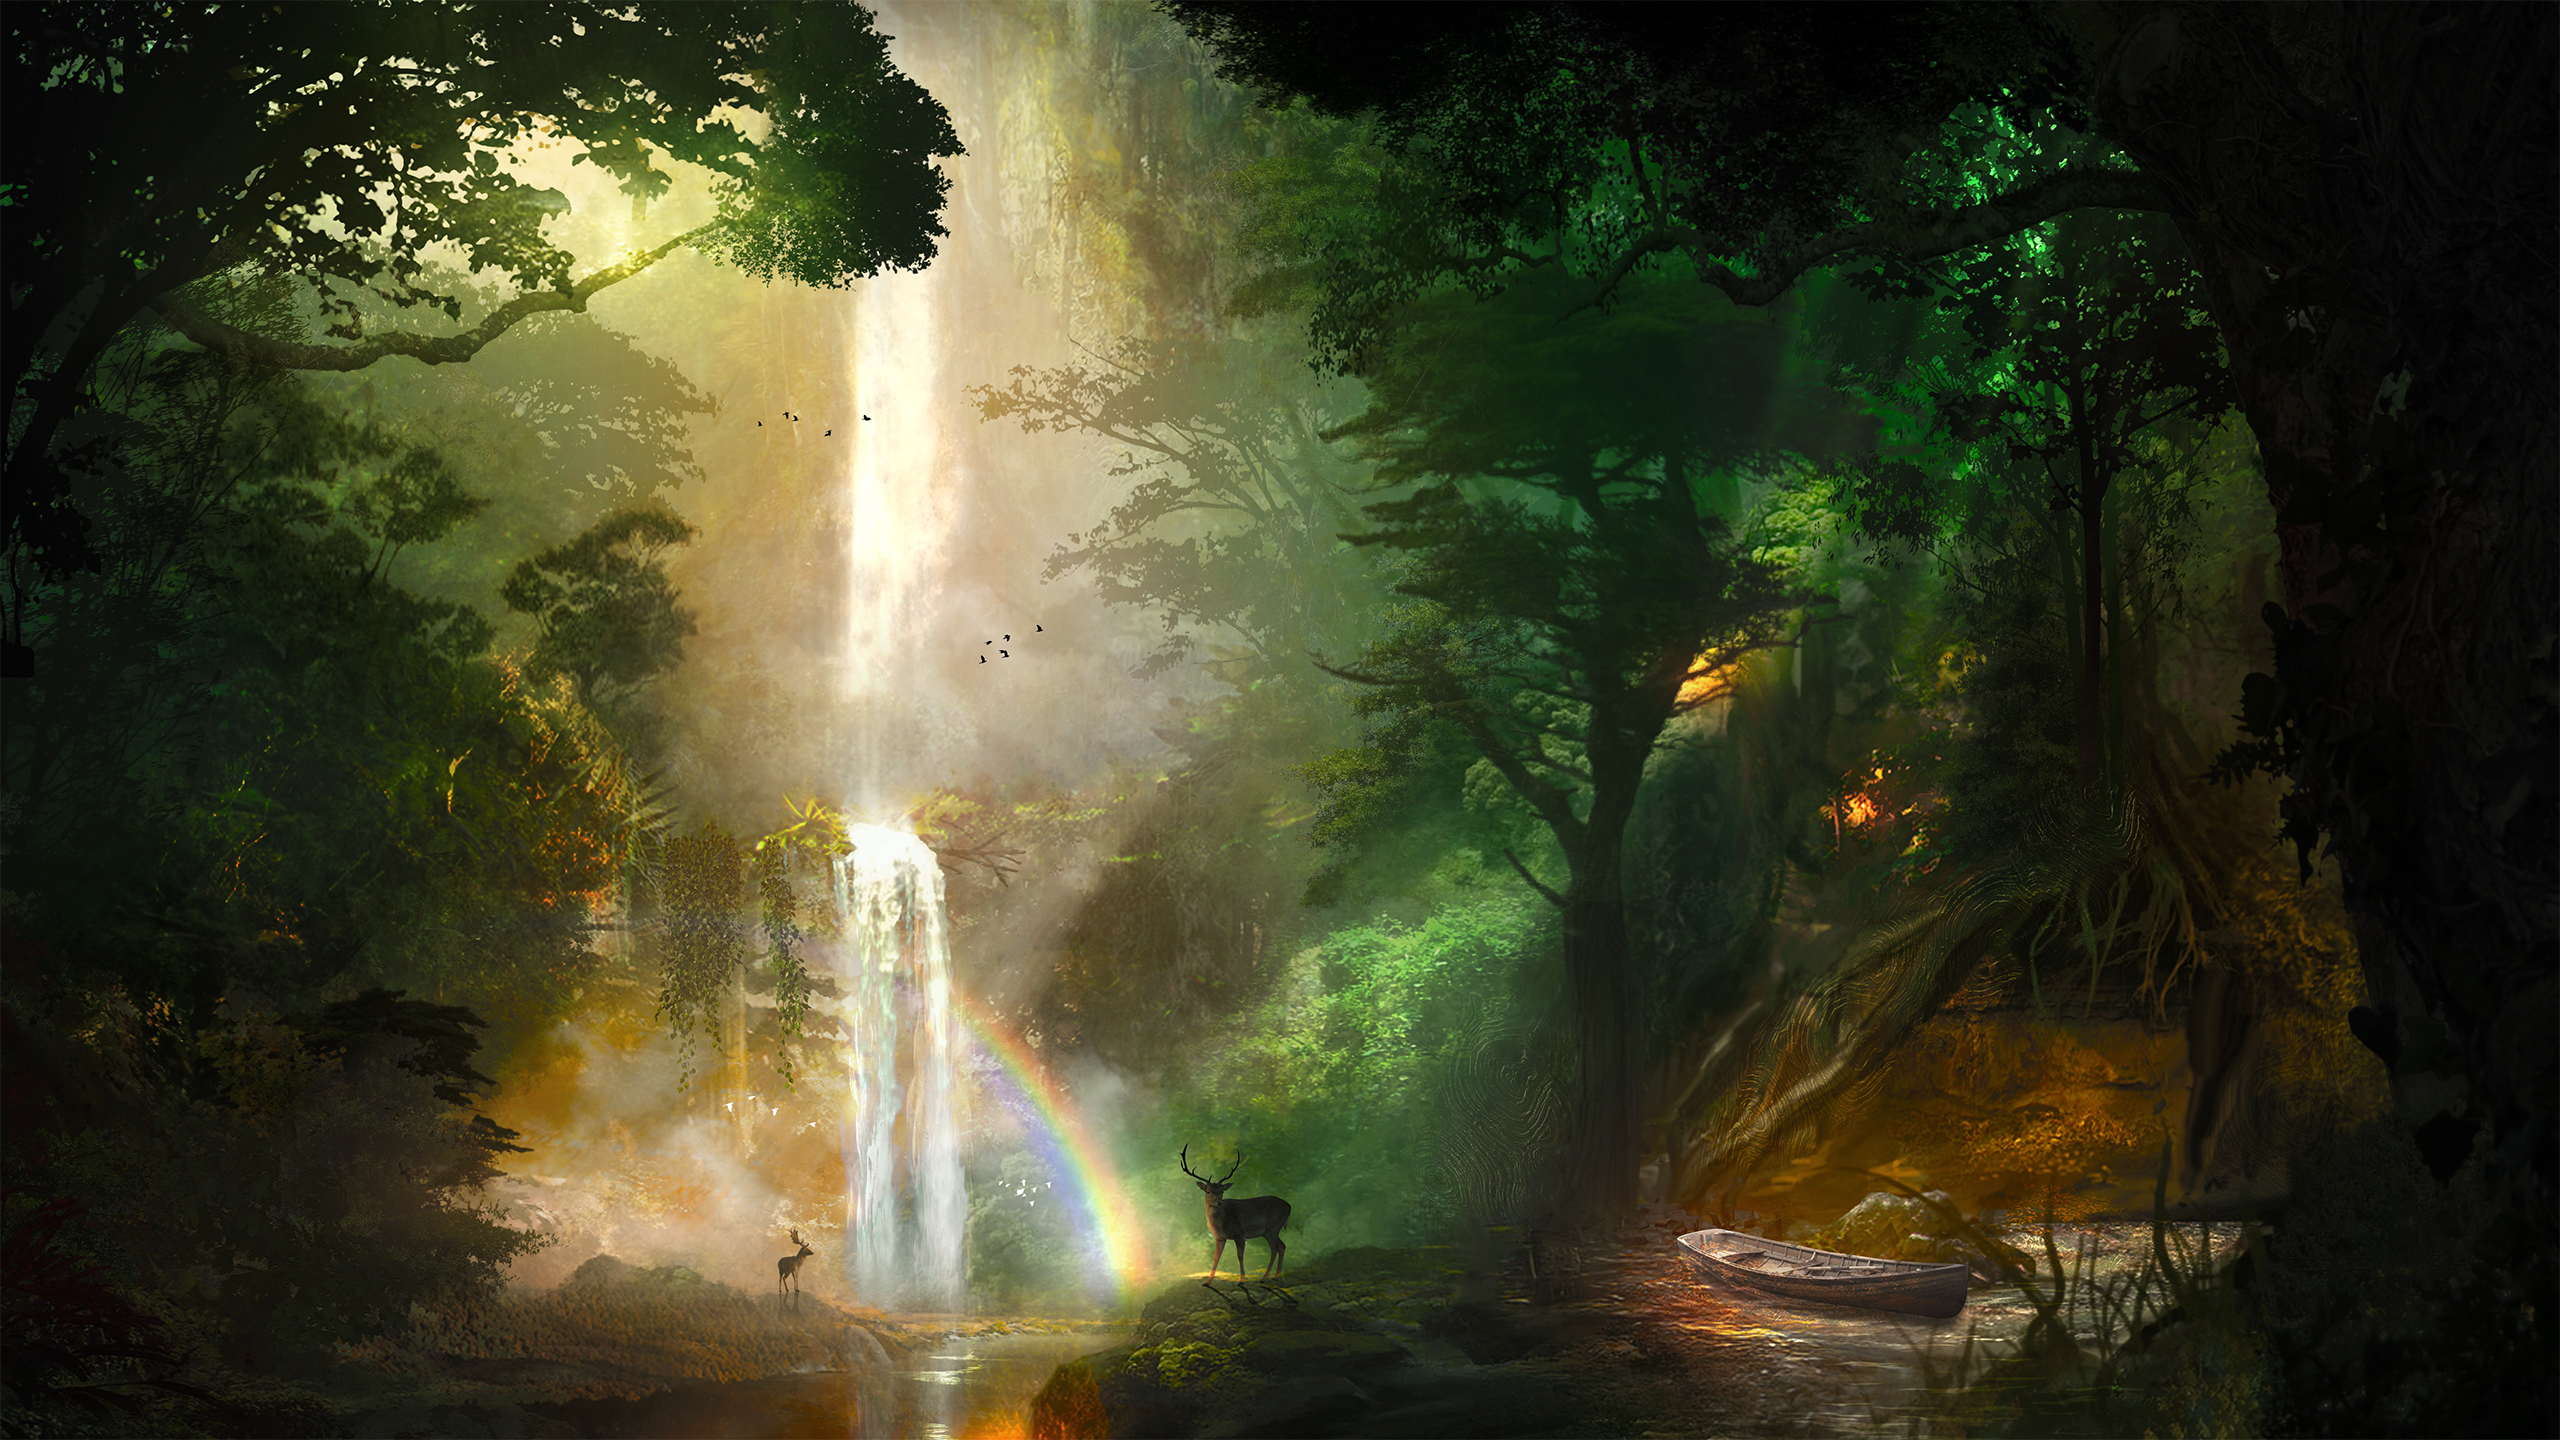 Digital Art Jungle Boat Rainbows Deer Waterfall Martina Stipan 2560x1440